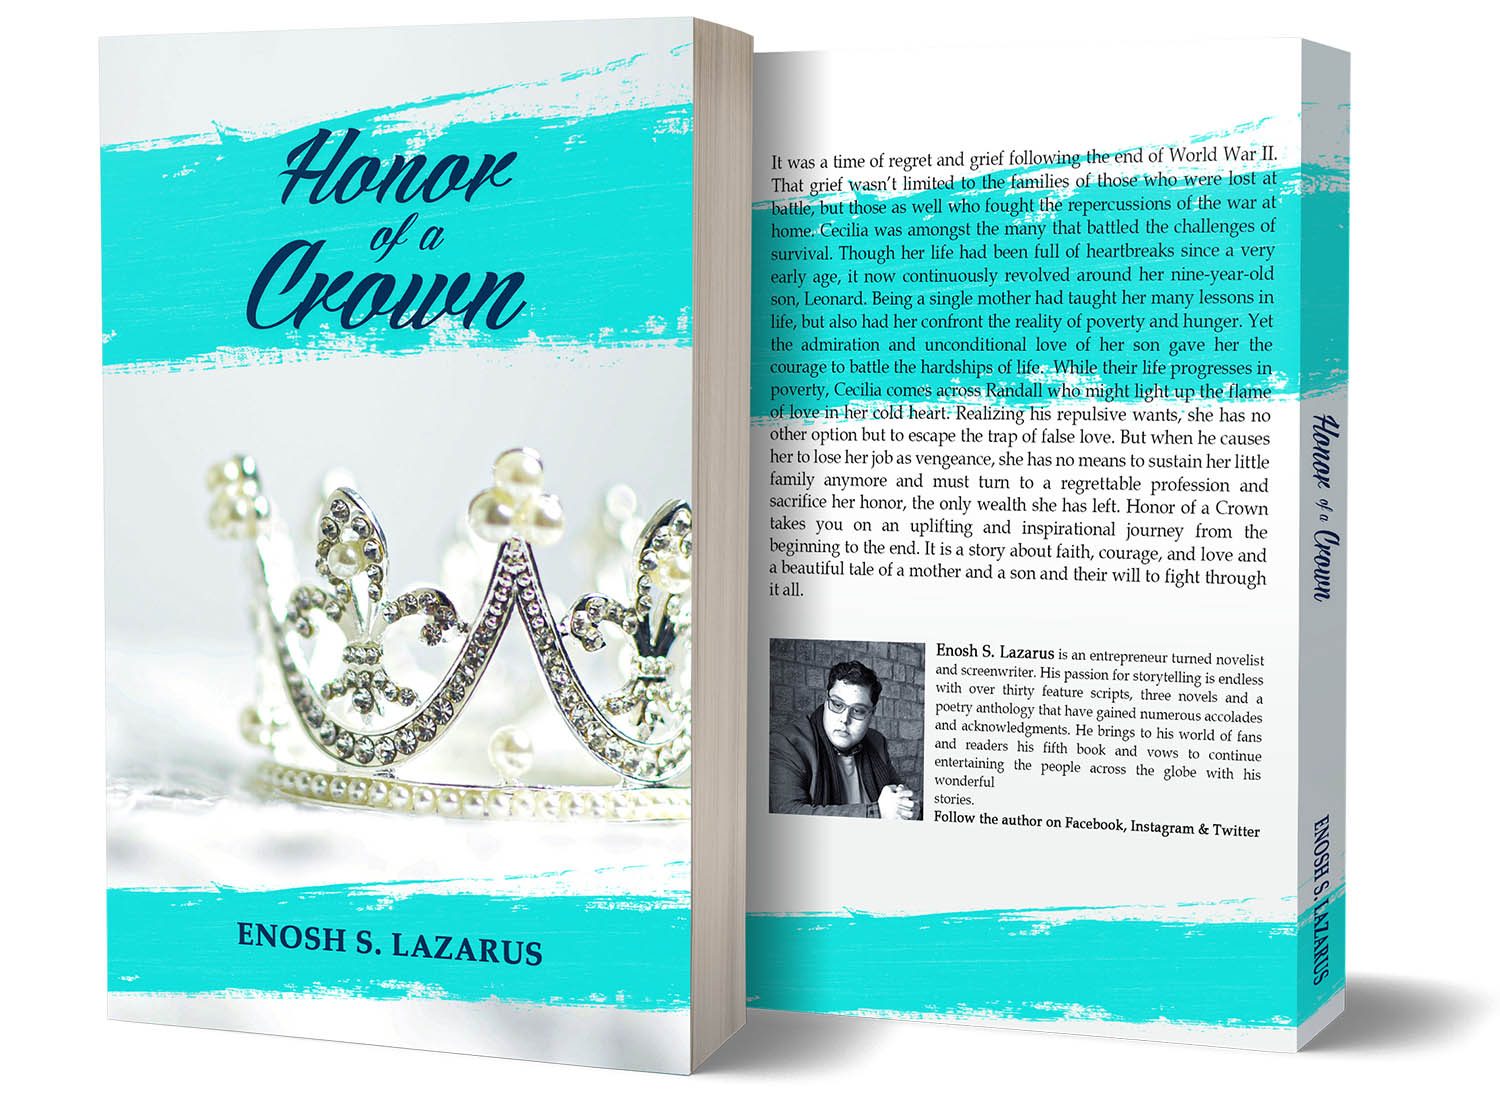 bookconsilio-portfolio-Honor-of-a-Crown-paperback-bookcoverdesign